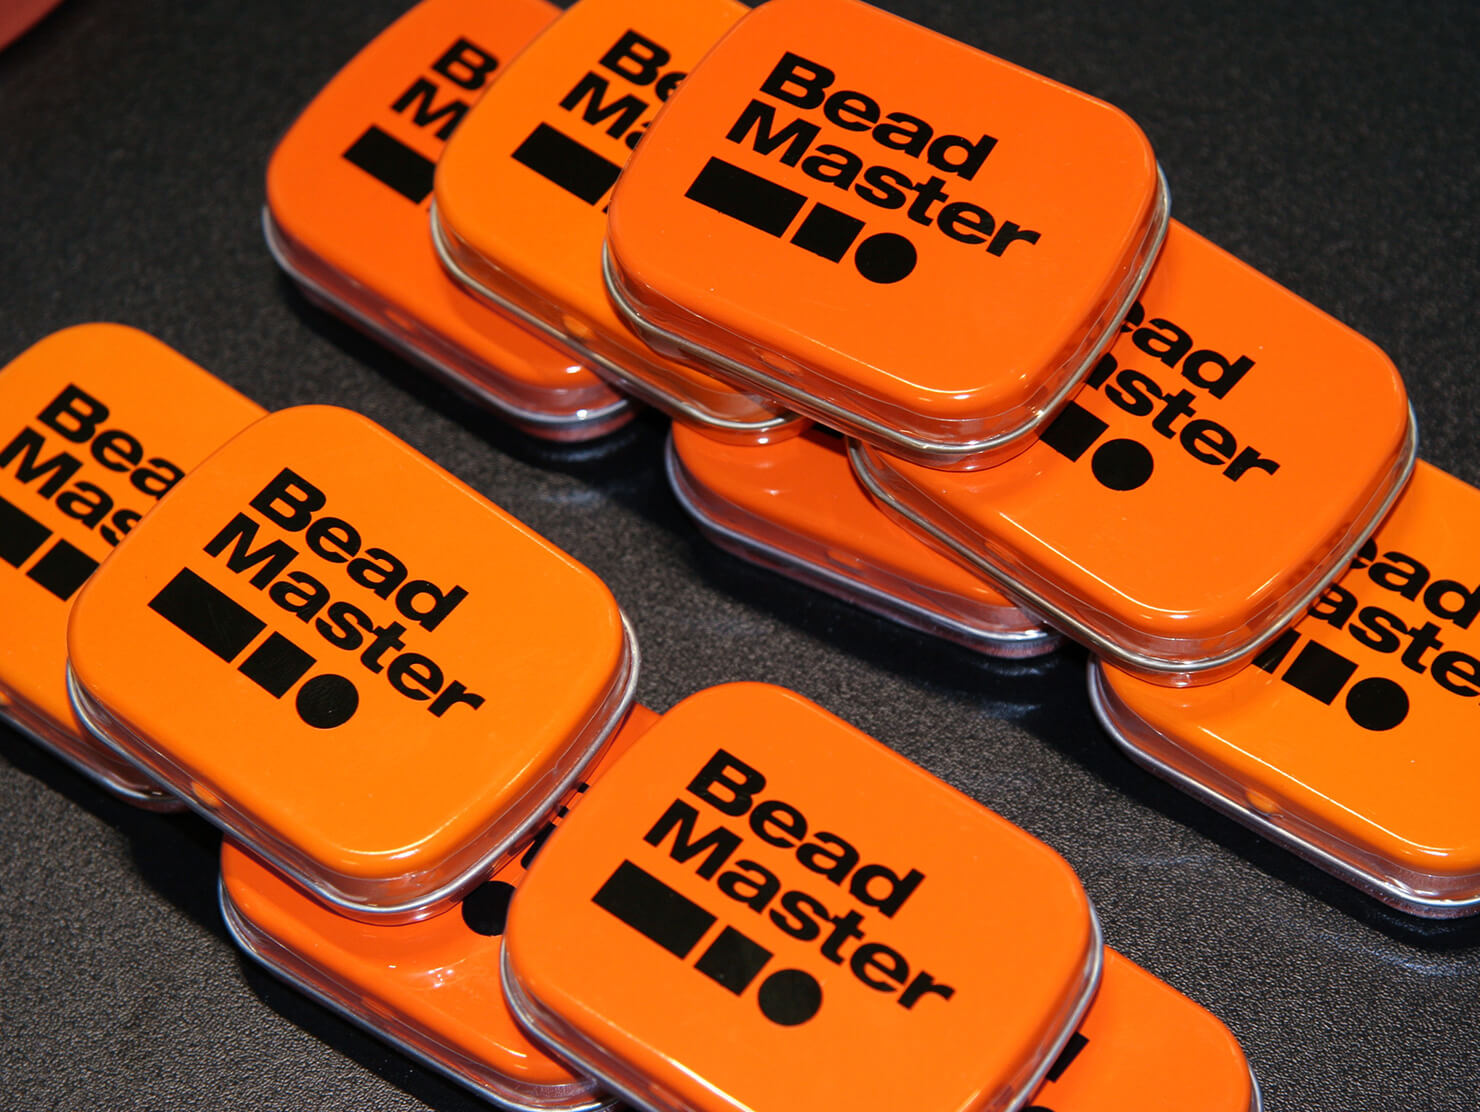 BeadMaster London Build 2019 branded mints.